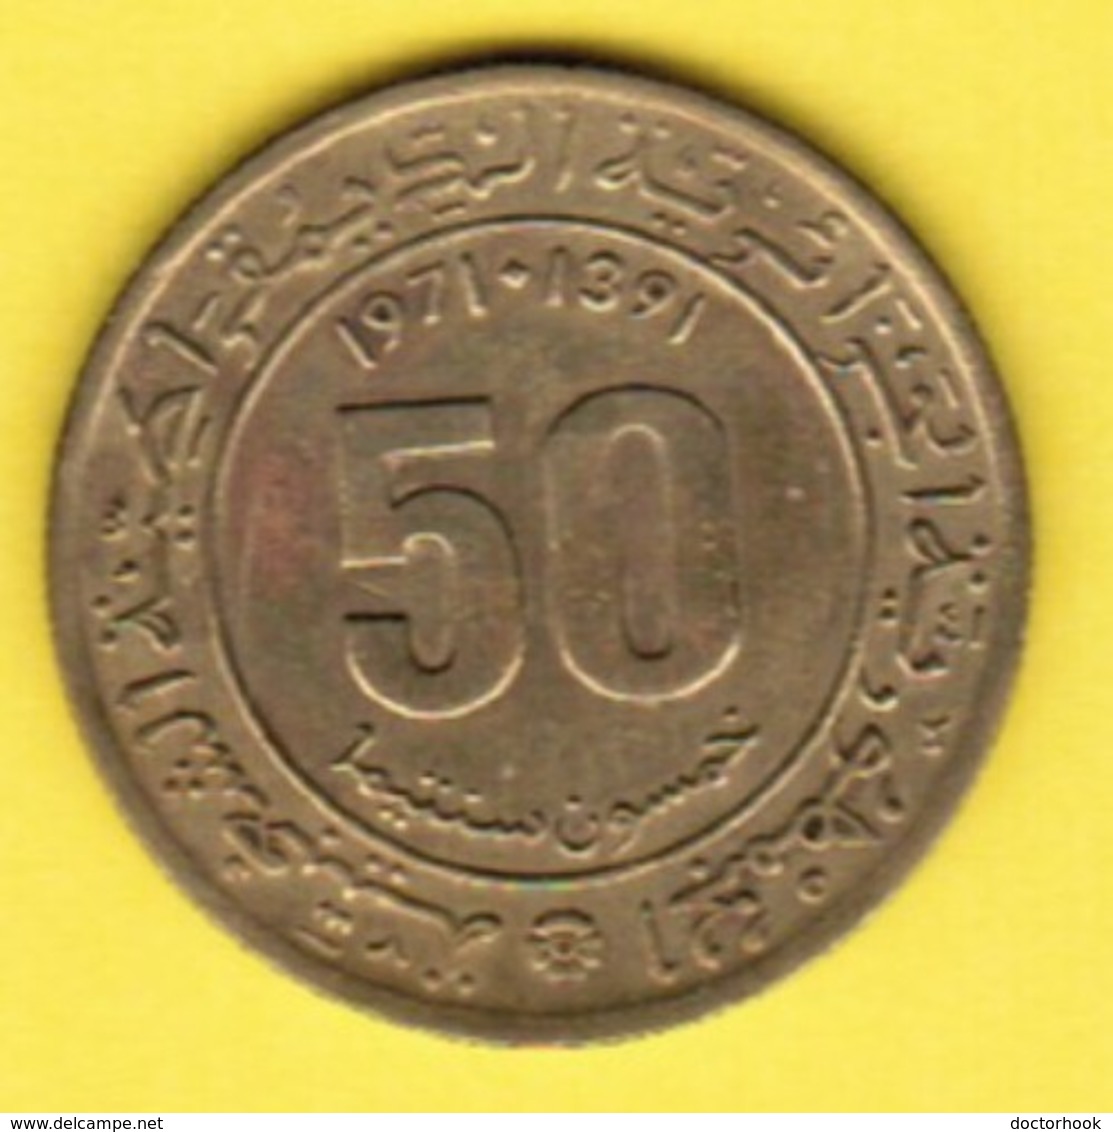 ALGERIA   50 CENTIMES 1971 (AH-1391) (KM # 102) #5352 - Algeria